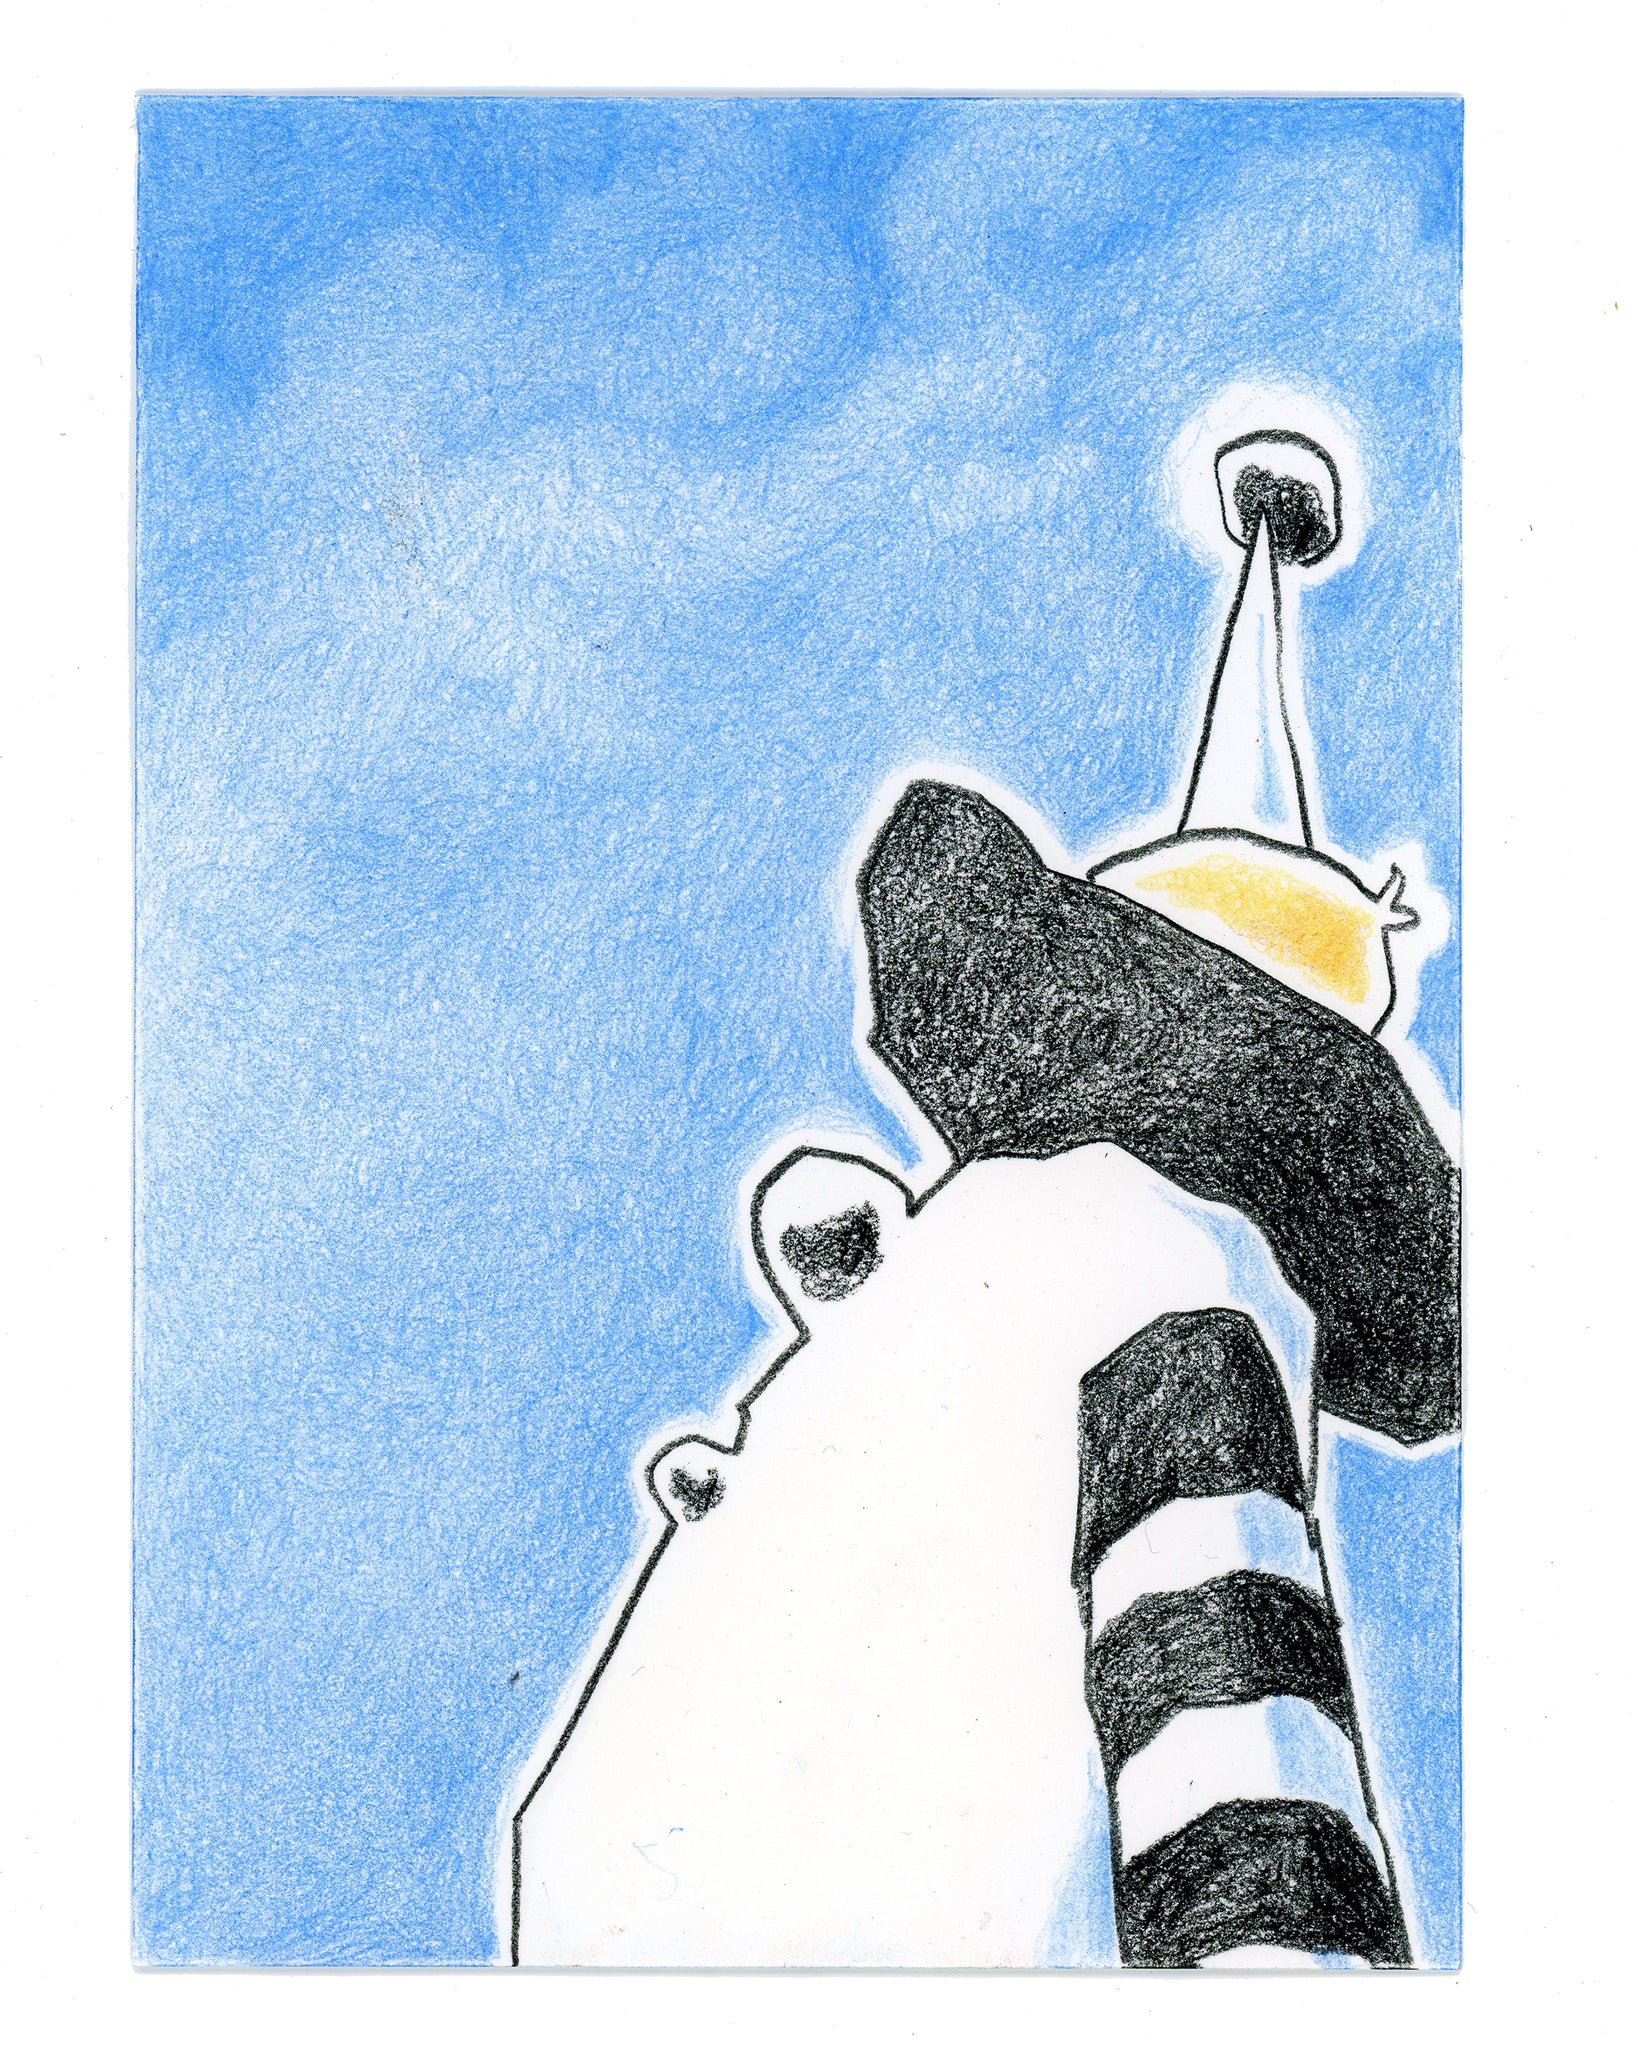 Drawing #8: "Blue Skies, Striped Pierrot"